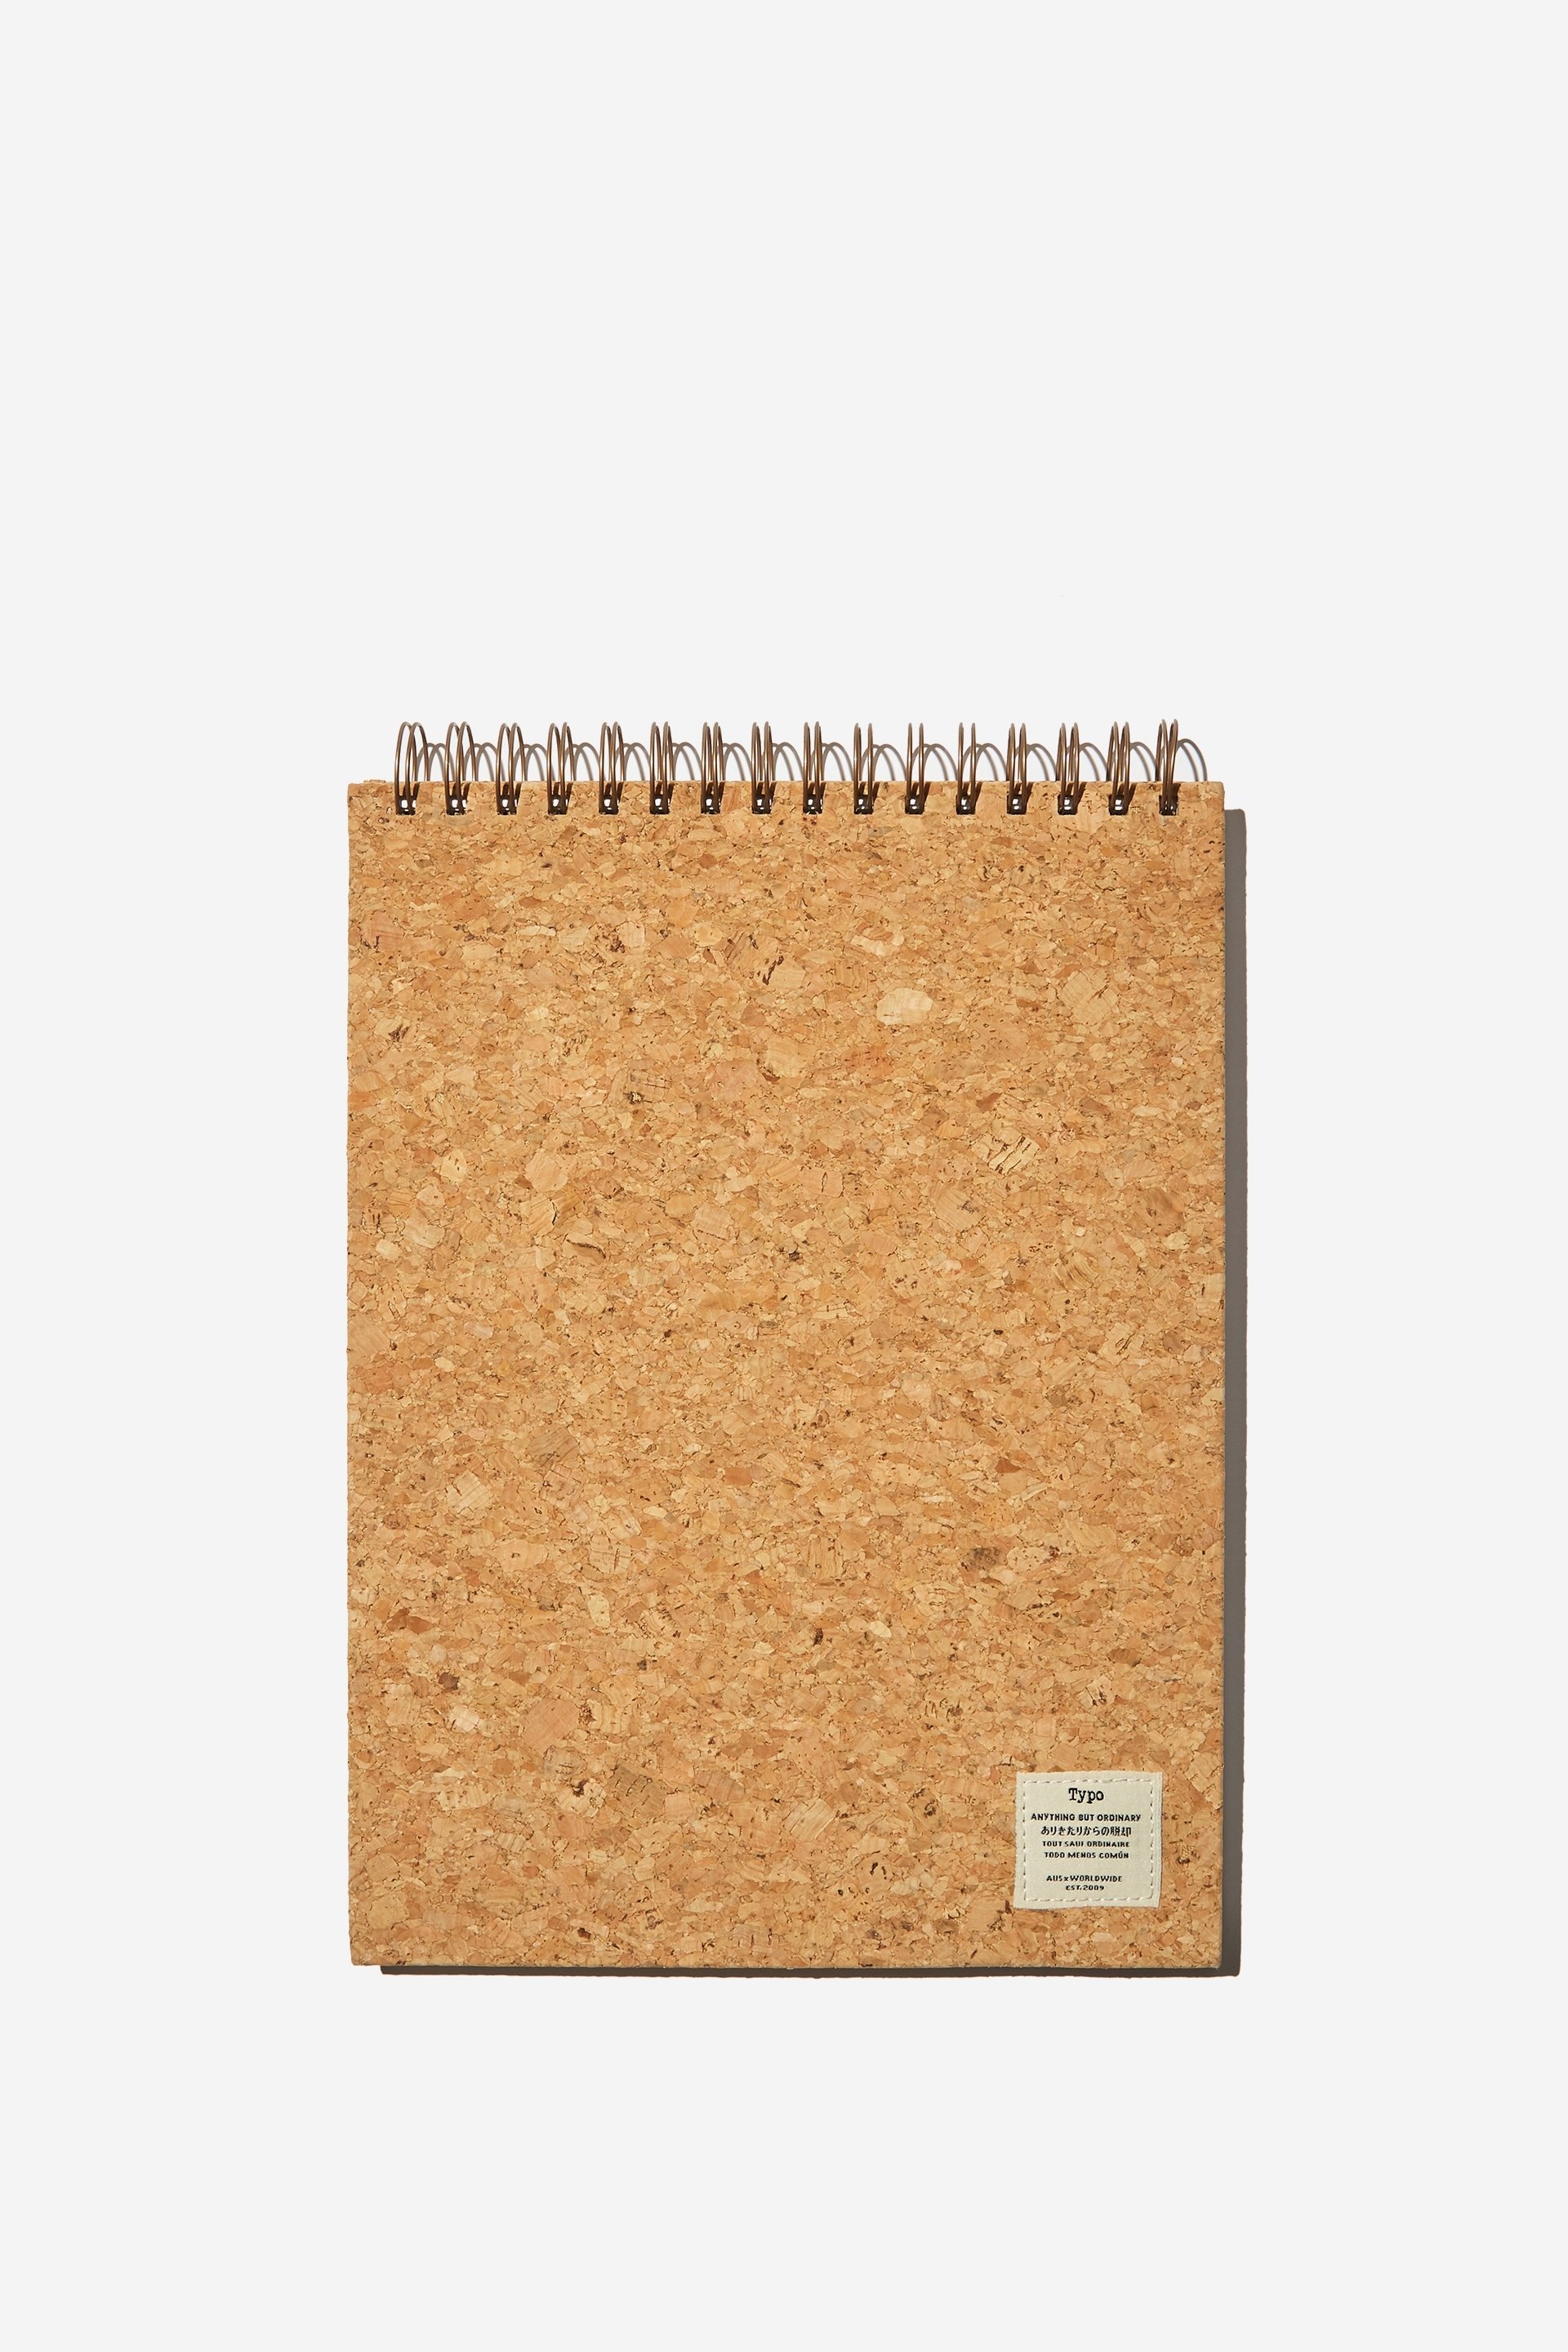 Typo - A4 Spiral Sketch Book - Natural cork